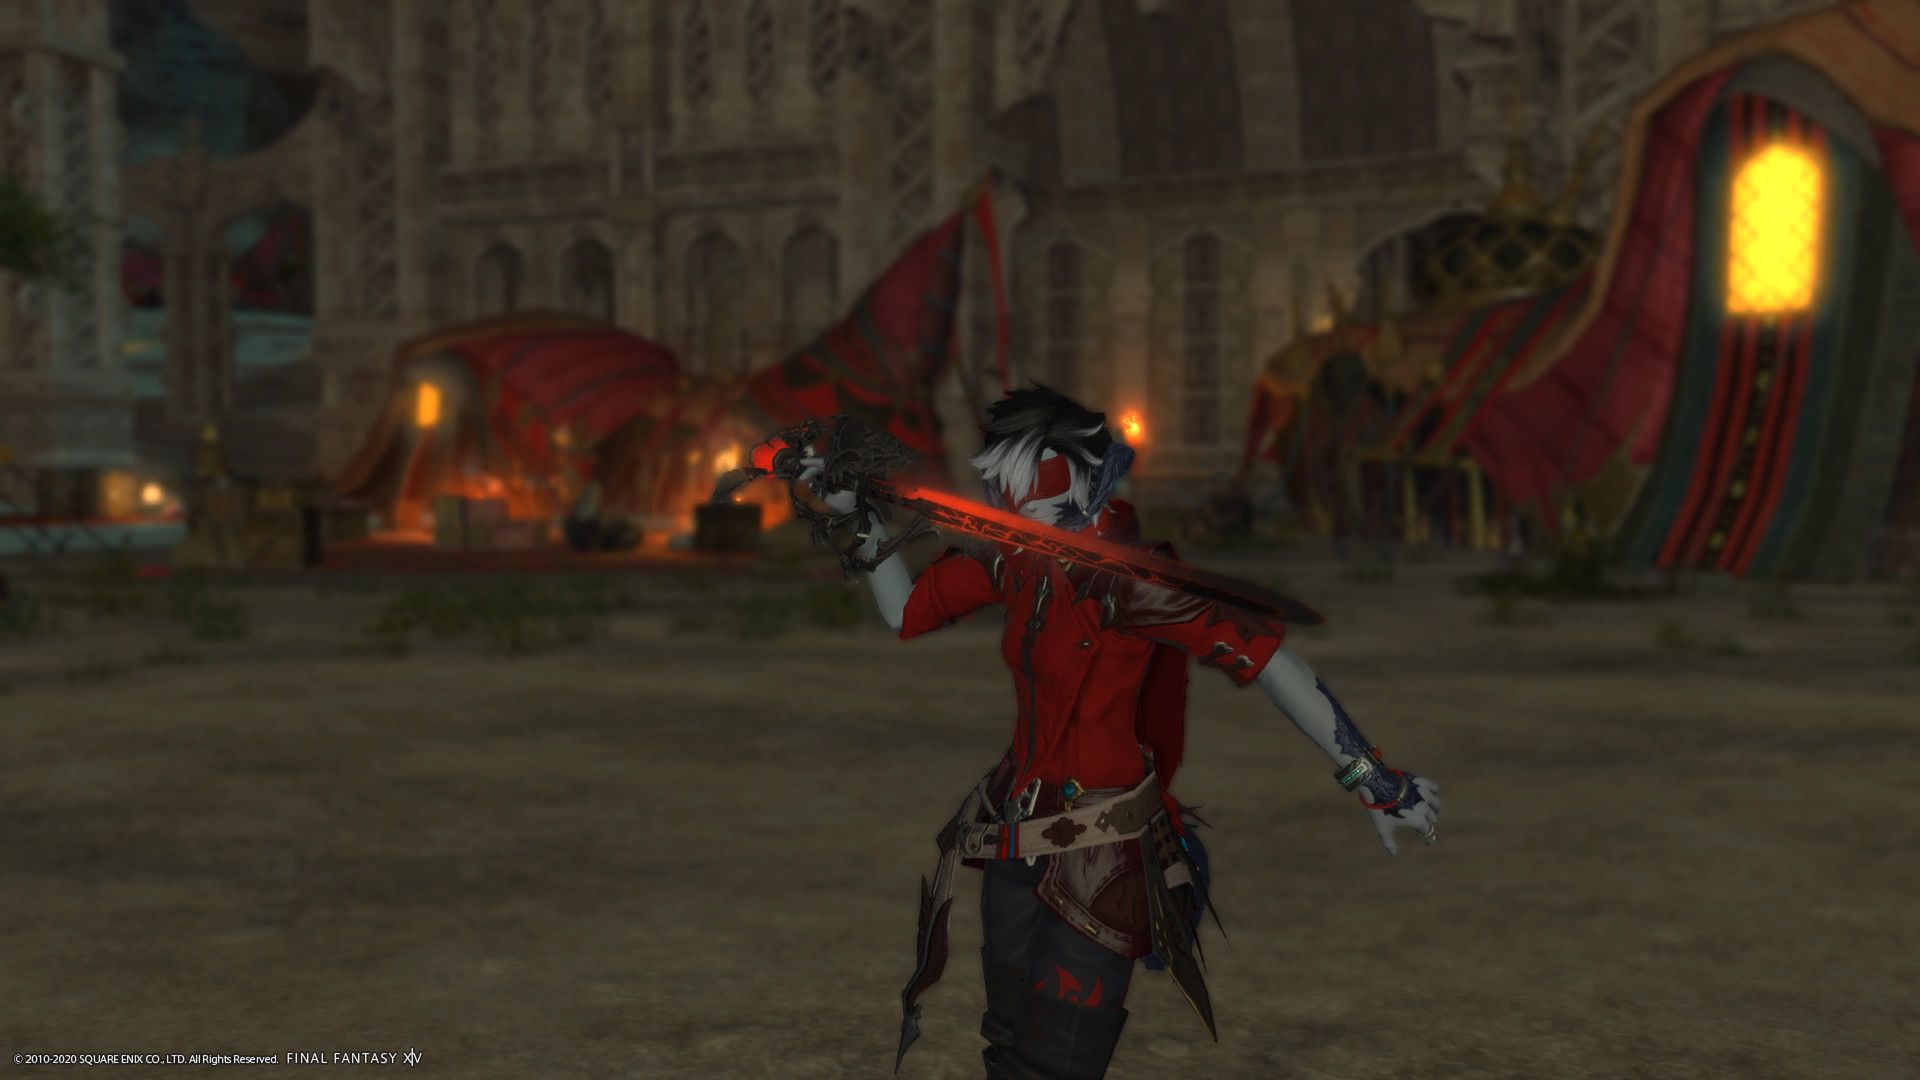 An Au'ra wielding a glowing red sword